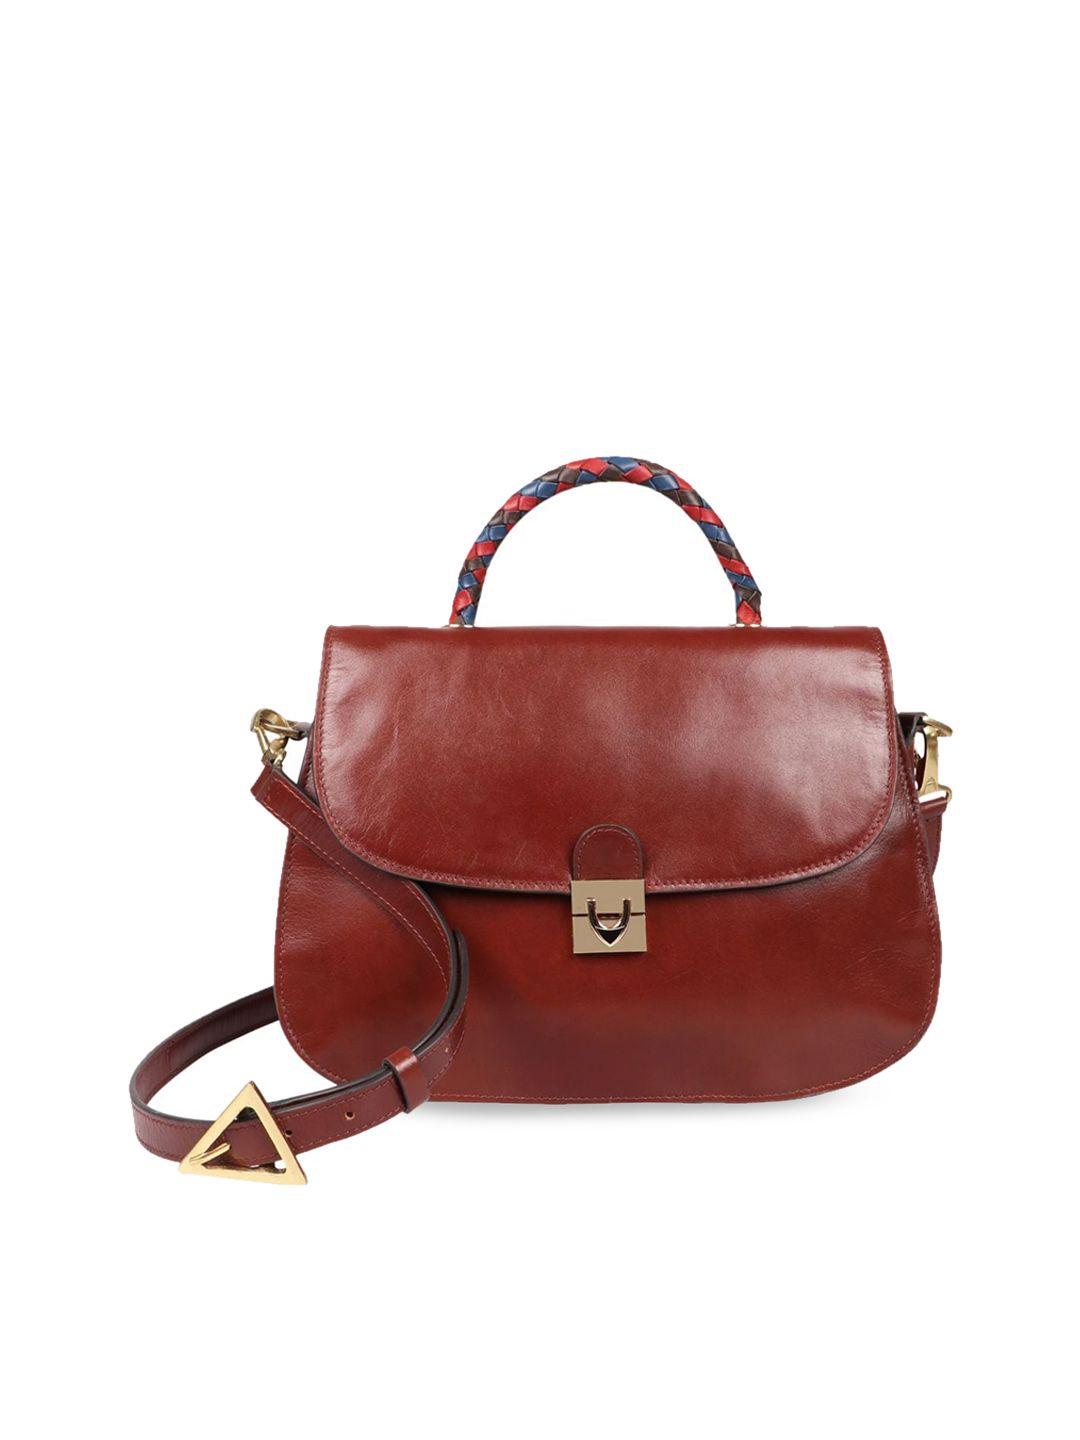 hidesign textured leather structured satchel